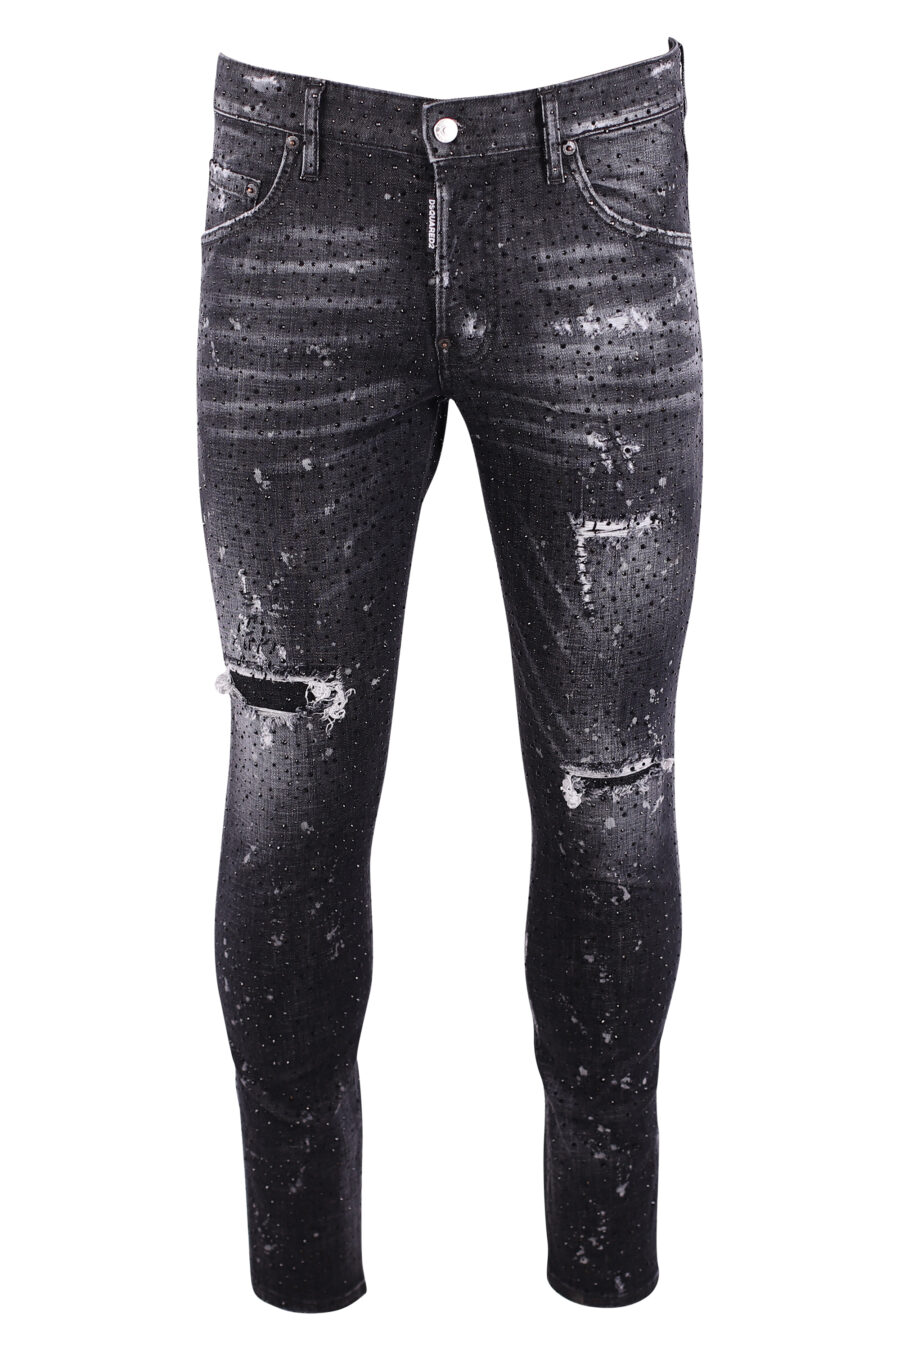 Pantalón vaquero "skater" negro con strass y desgastado con rotos - IMG 3193